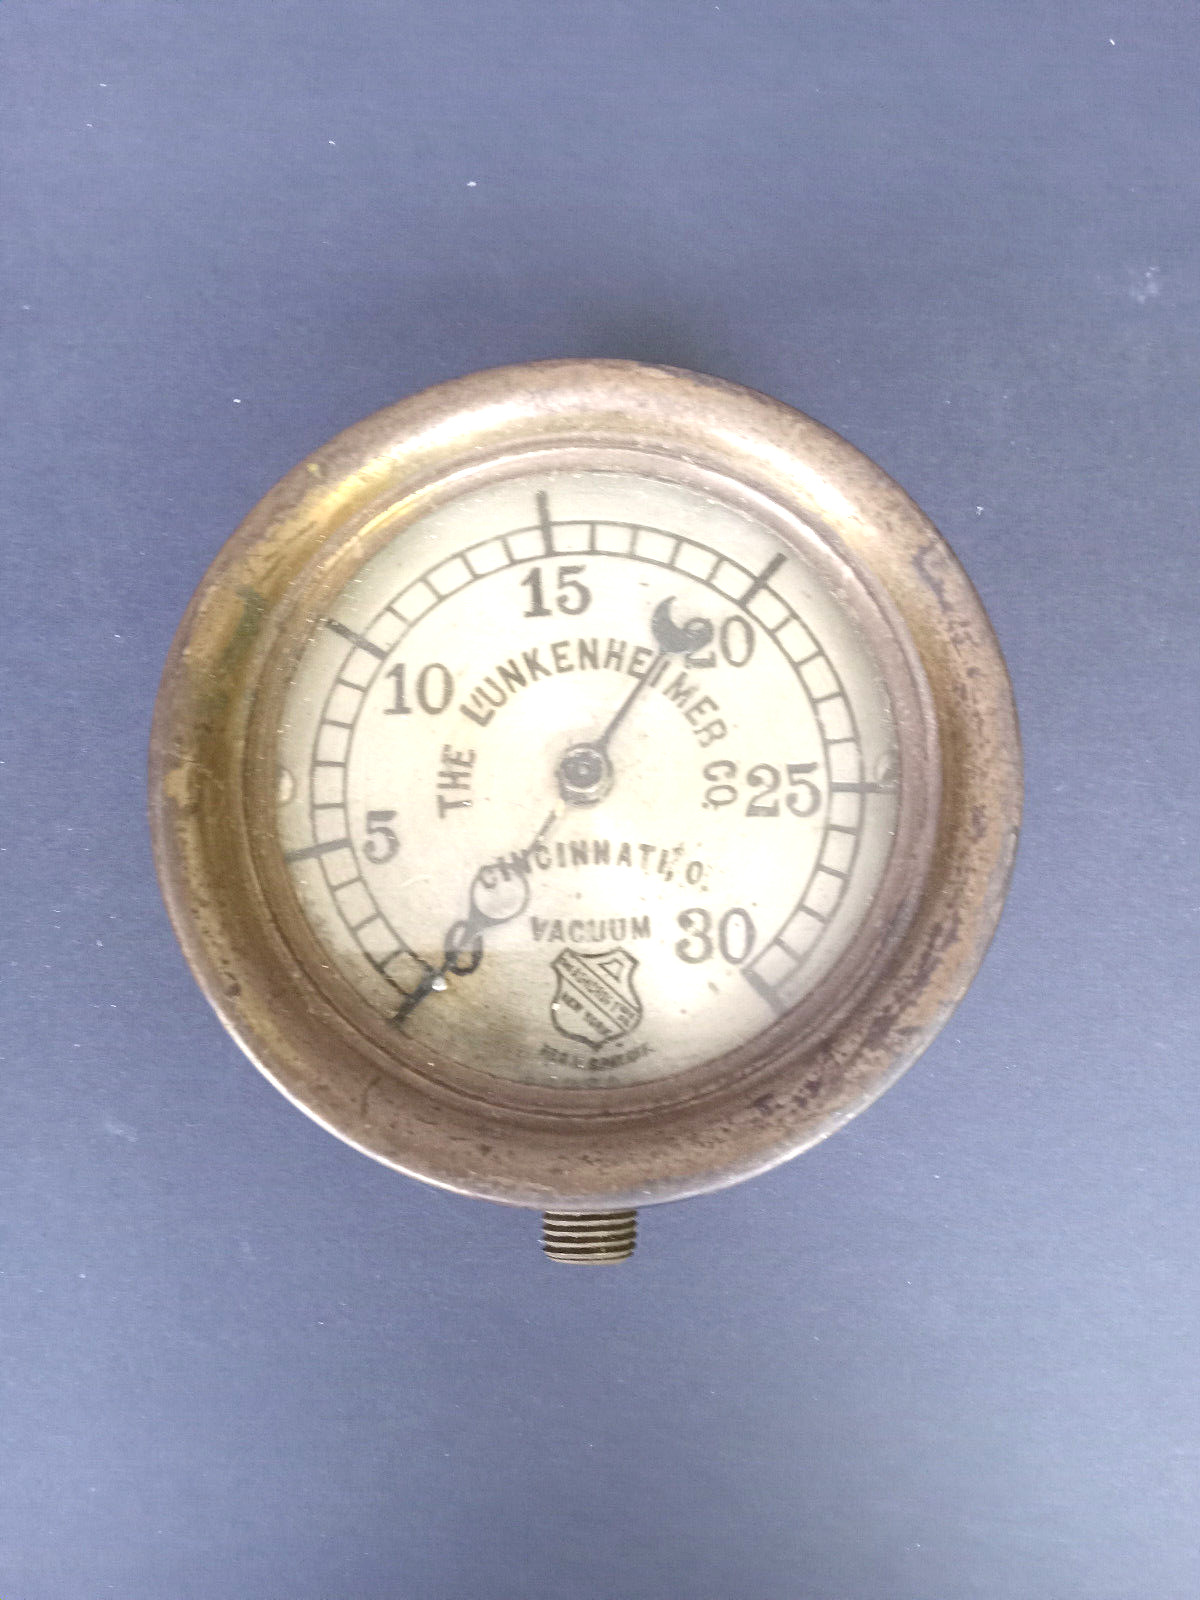 Antique Ashcroft MFG Lunkenheimer Co. Gauge Vacuum Brass 368322A